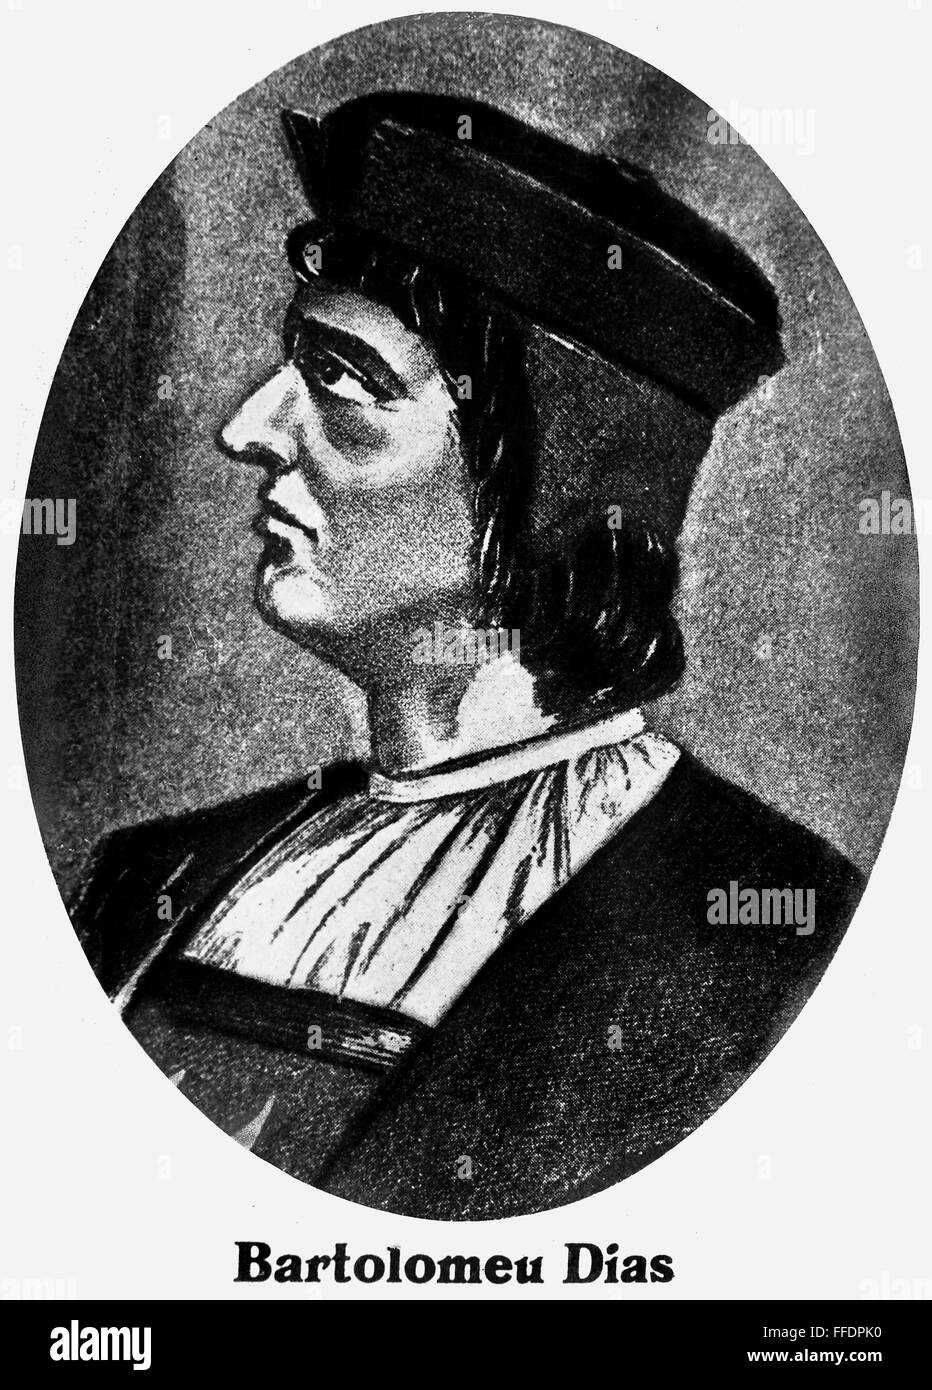 BARTOLOMEU DIAS (c1450-1500). /nPortuguese explorer who discovered the Cape of Good Hope. Undated portrait. Stock Photo